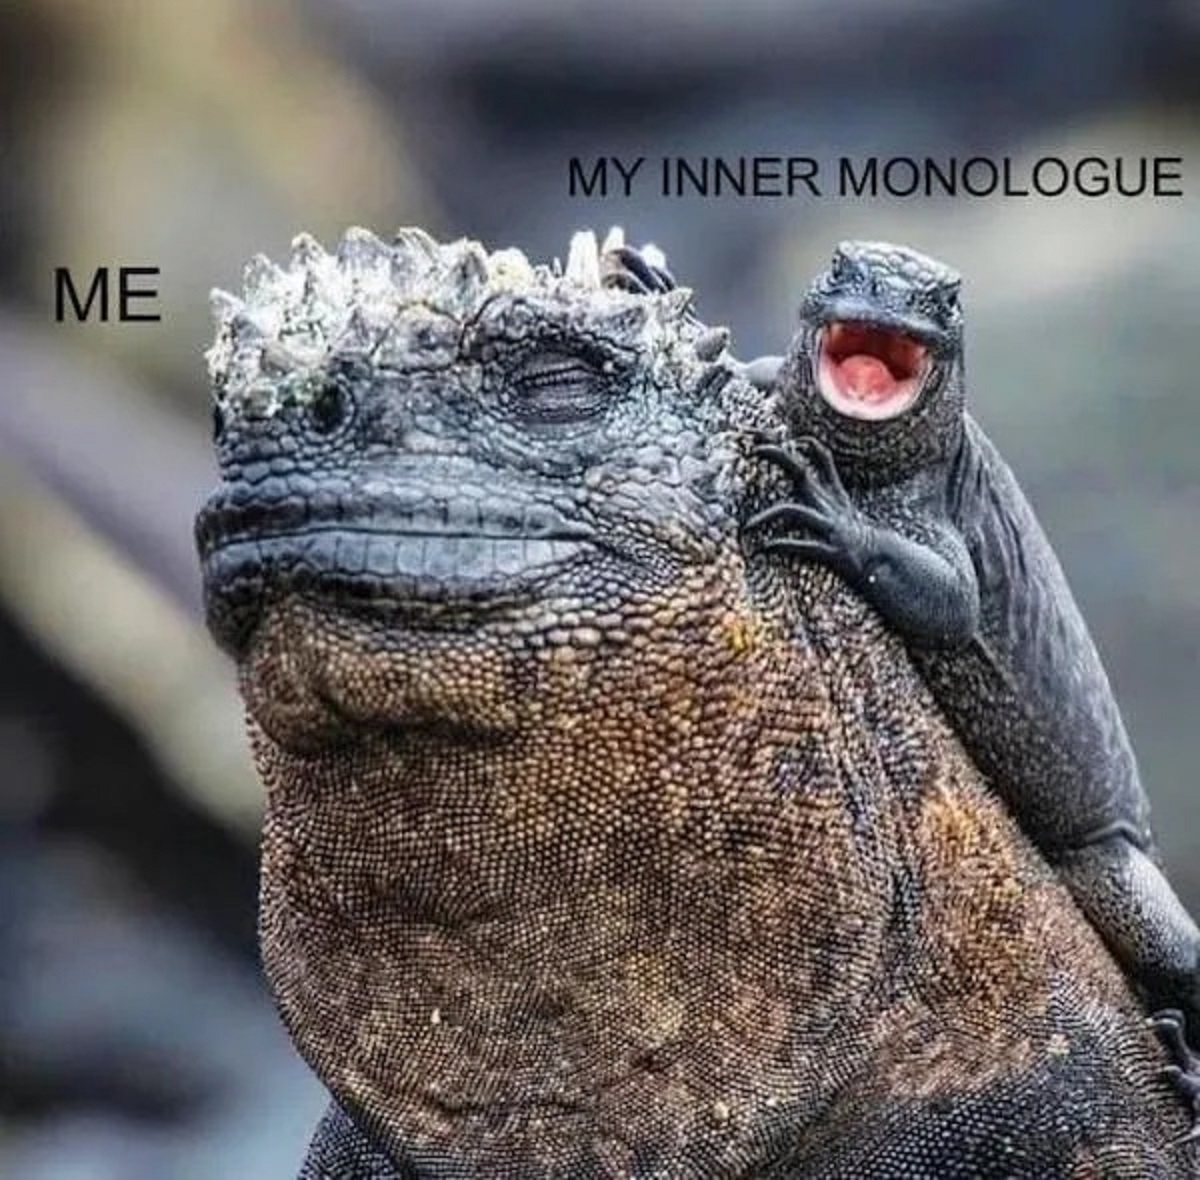 iguana cute - Me My Inner Monologue